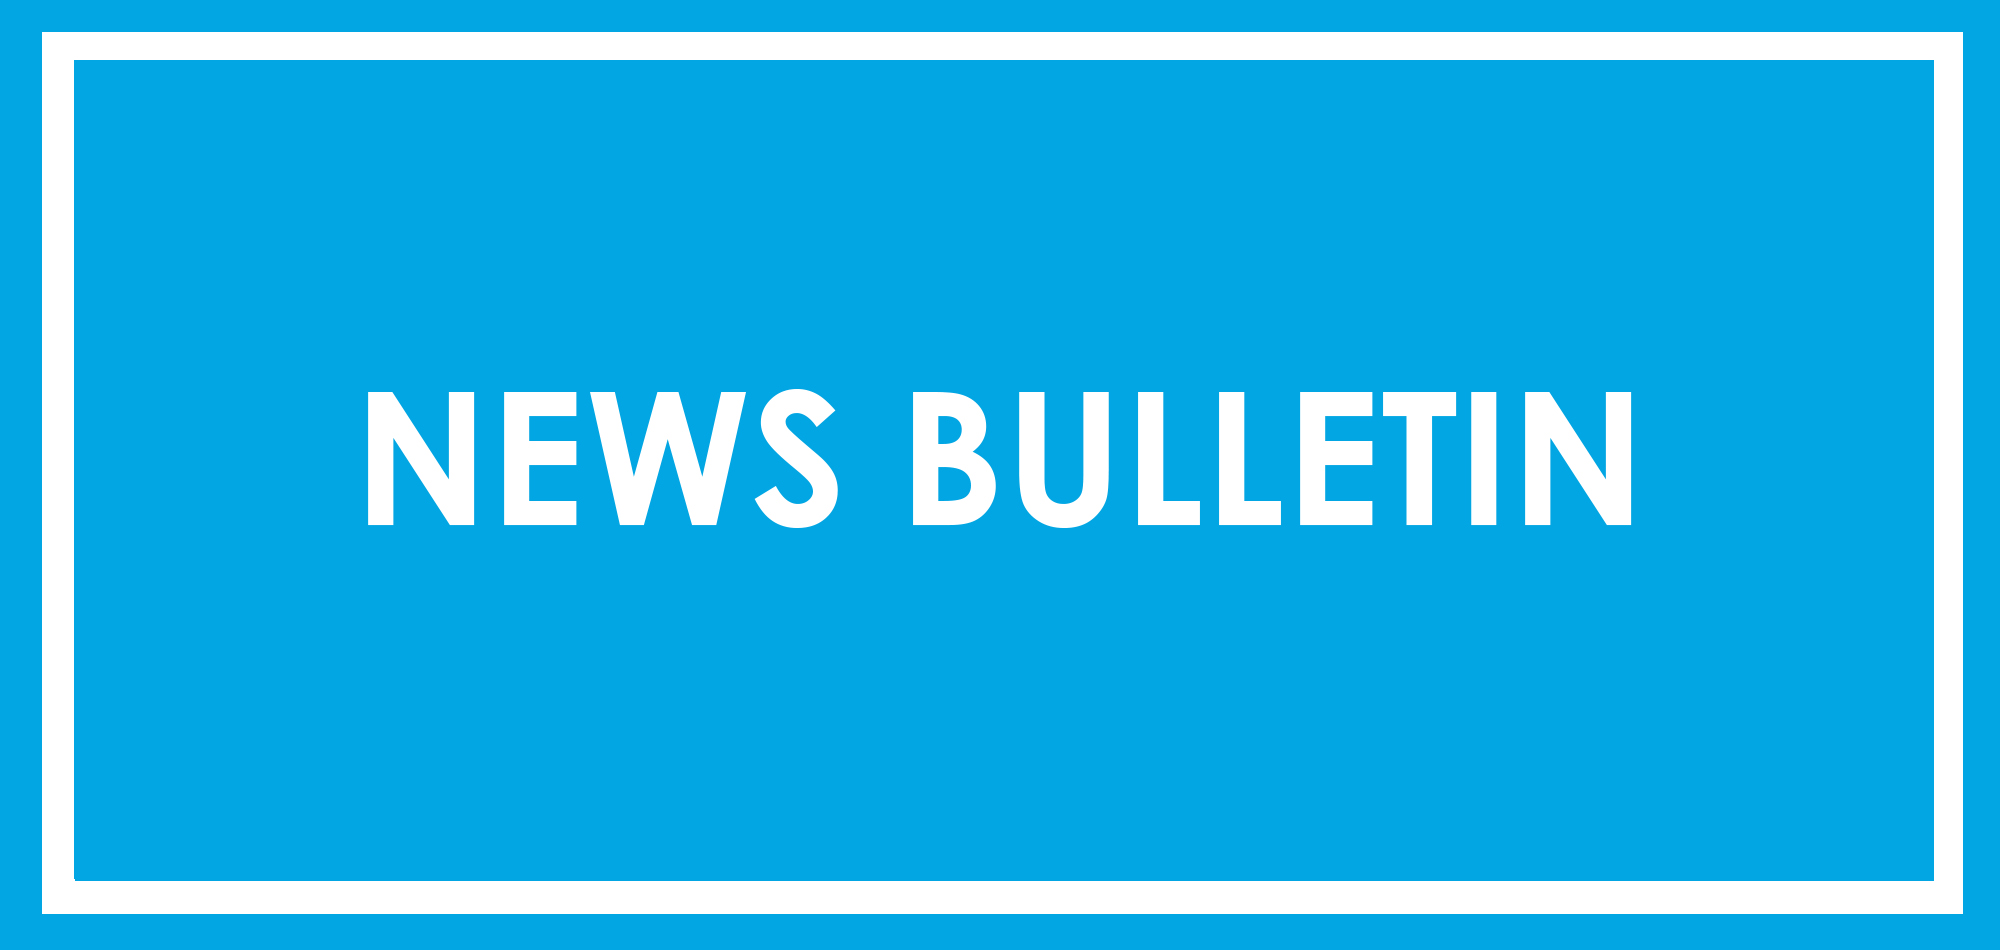 News Bulletin - 01.09.20